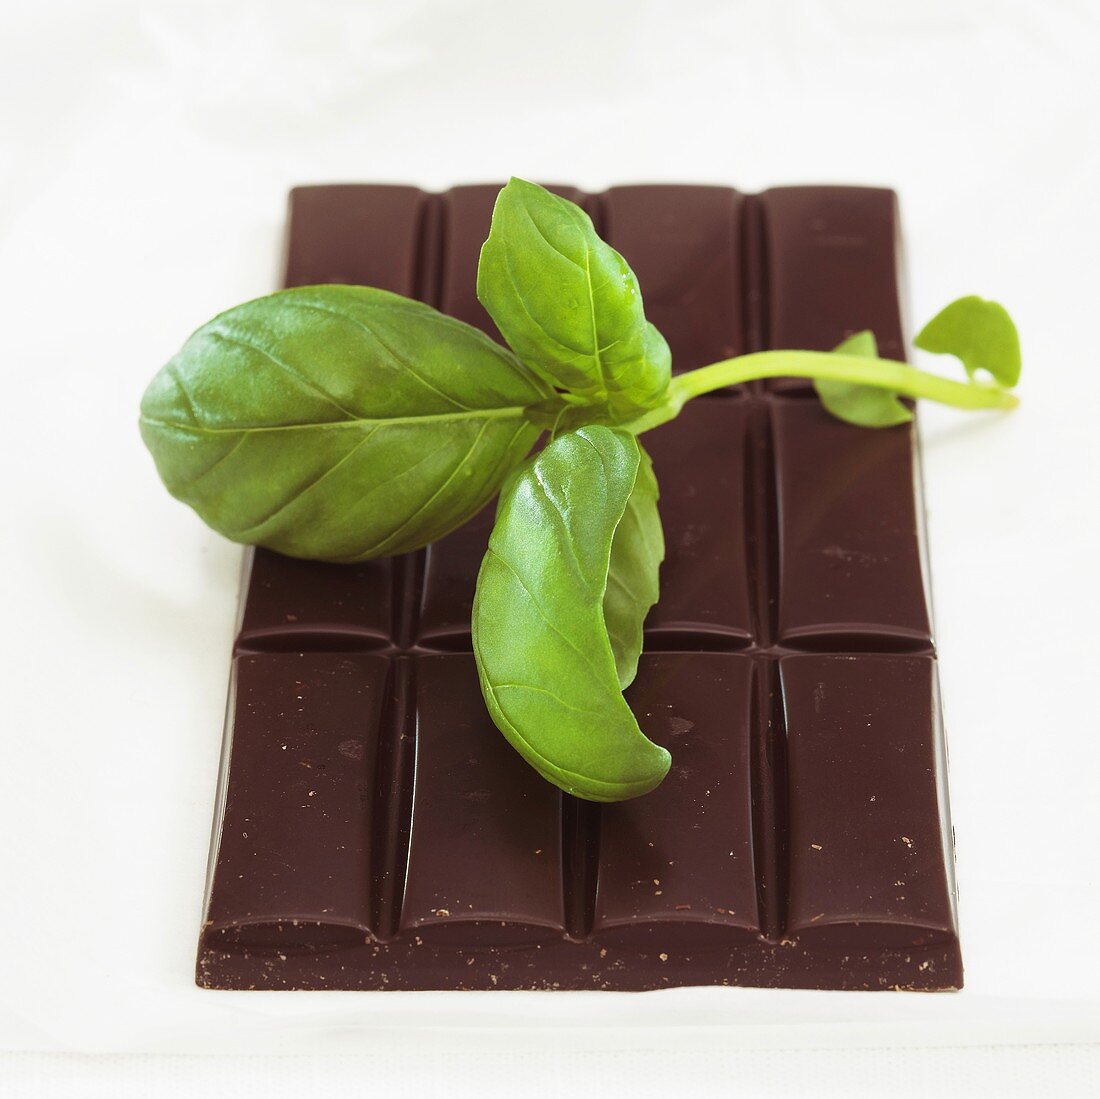 Chocolate with basil